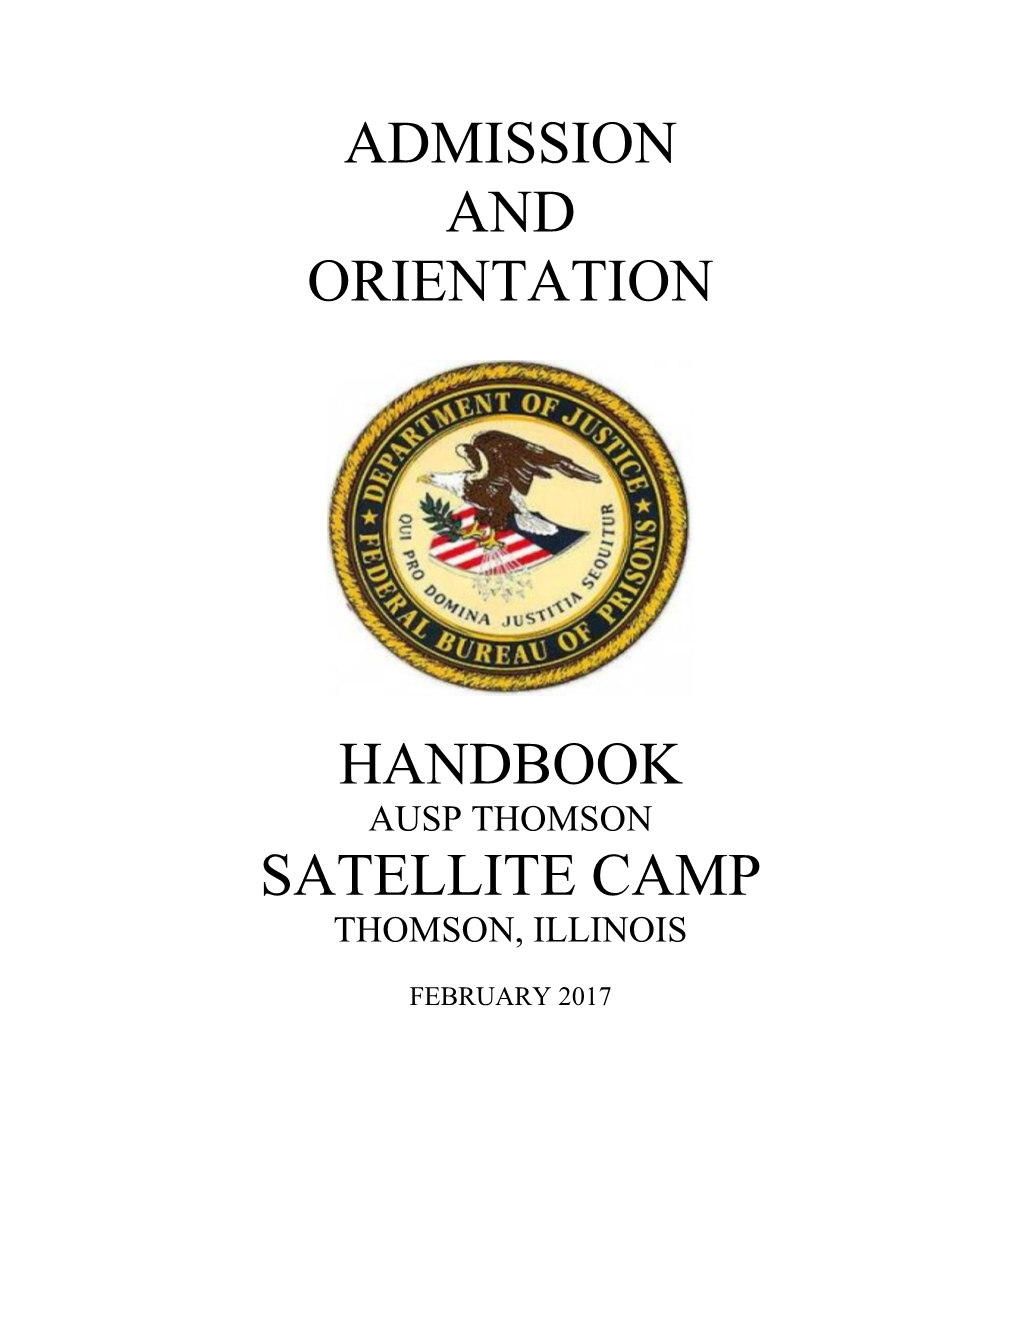 AUSP Thomson Camp Admissions & Orientation Handbook